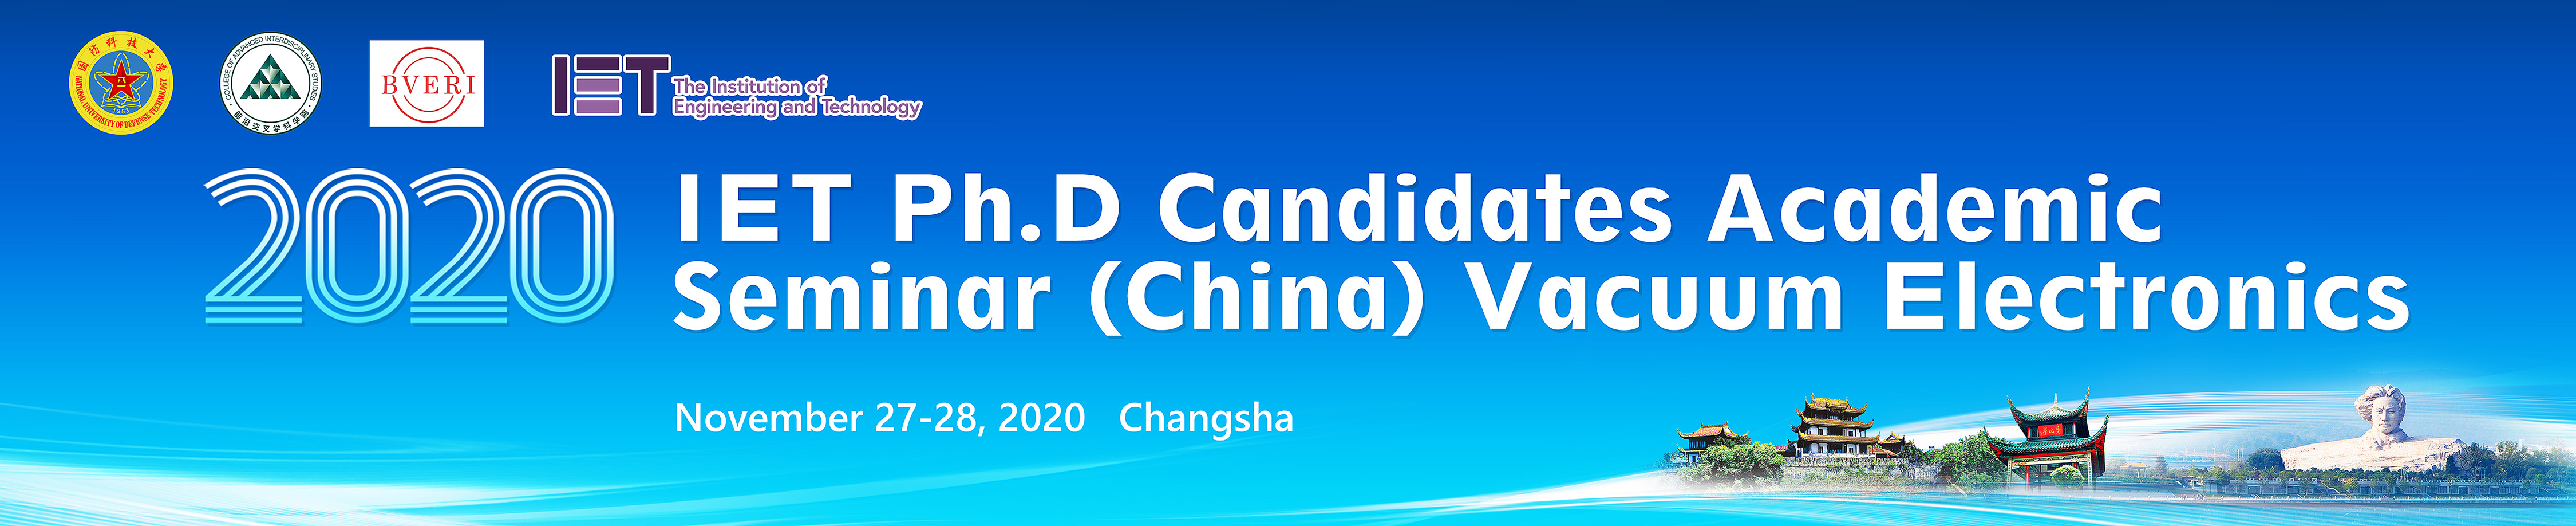 2020 IET Ph.D Candidates Academic Seminar (China) Vacuum Electronics